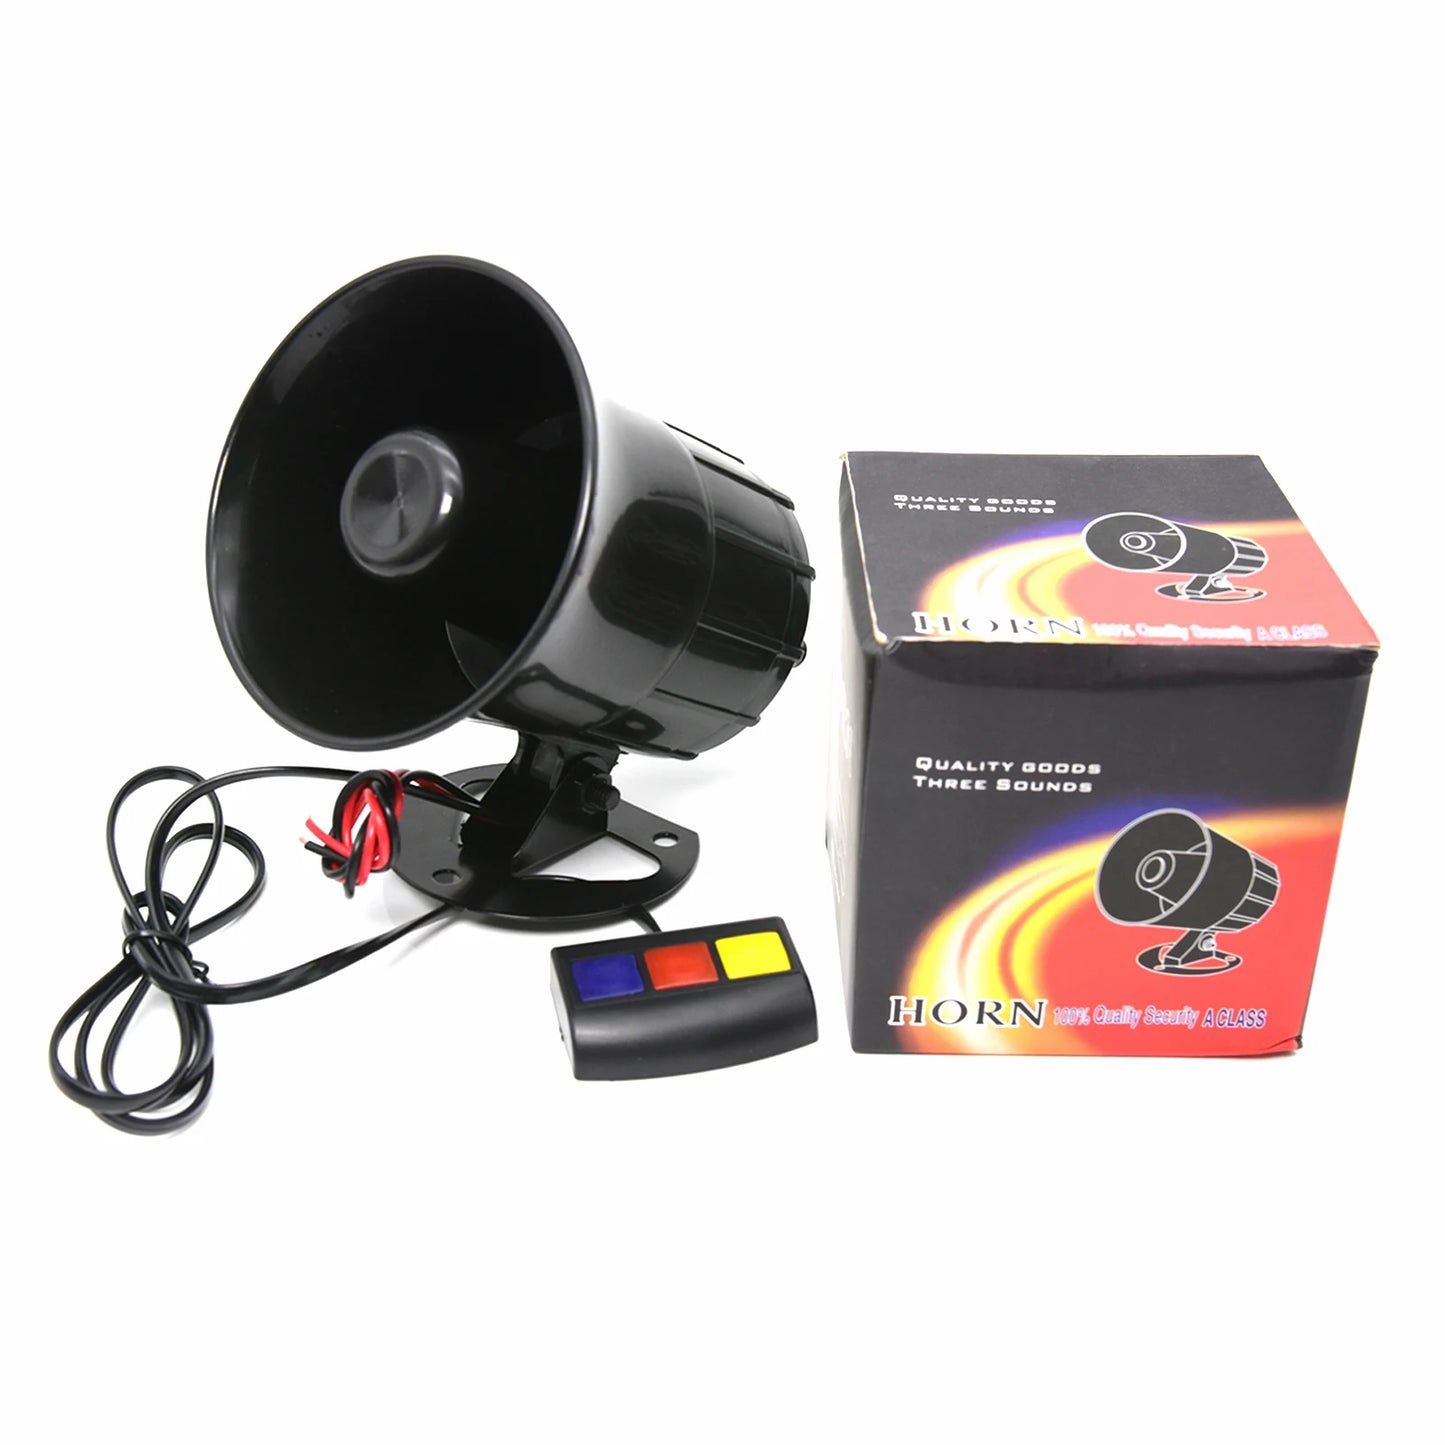 3 Tone Loud Car Horn Air Horn: 12V Loud Speaker for Car, Motorcycle - Police Fire Siren Horn, 115dB Sound